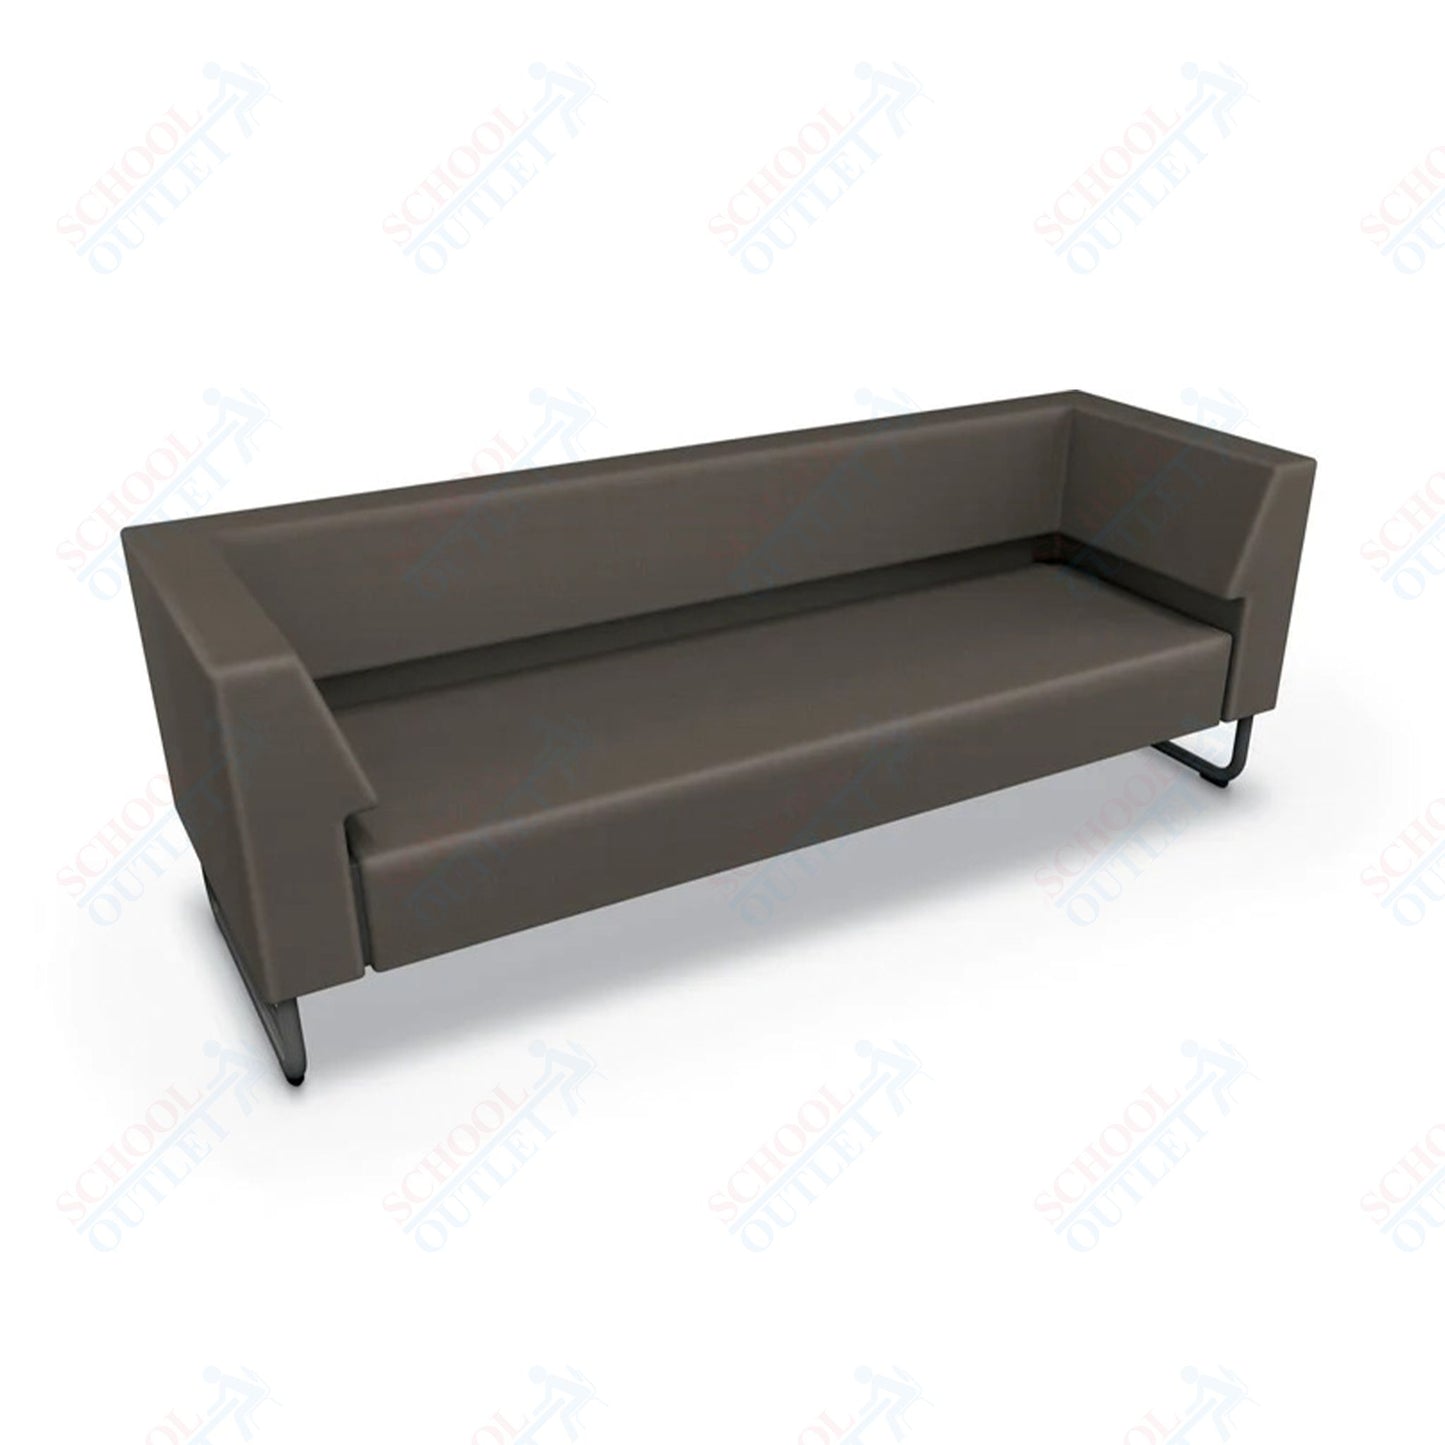 Mooreco Akt Soft Seating Lounge Sofa - Armless - Grade 02 Fabric and Powder Coated Sled Legs